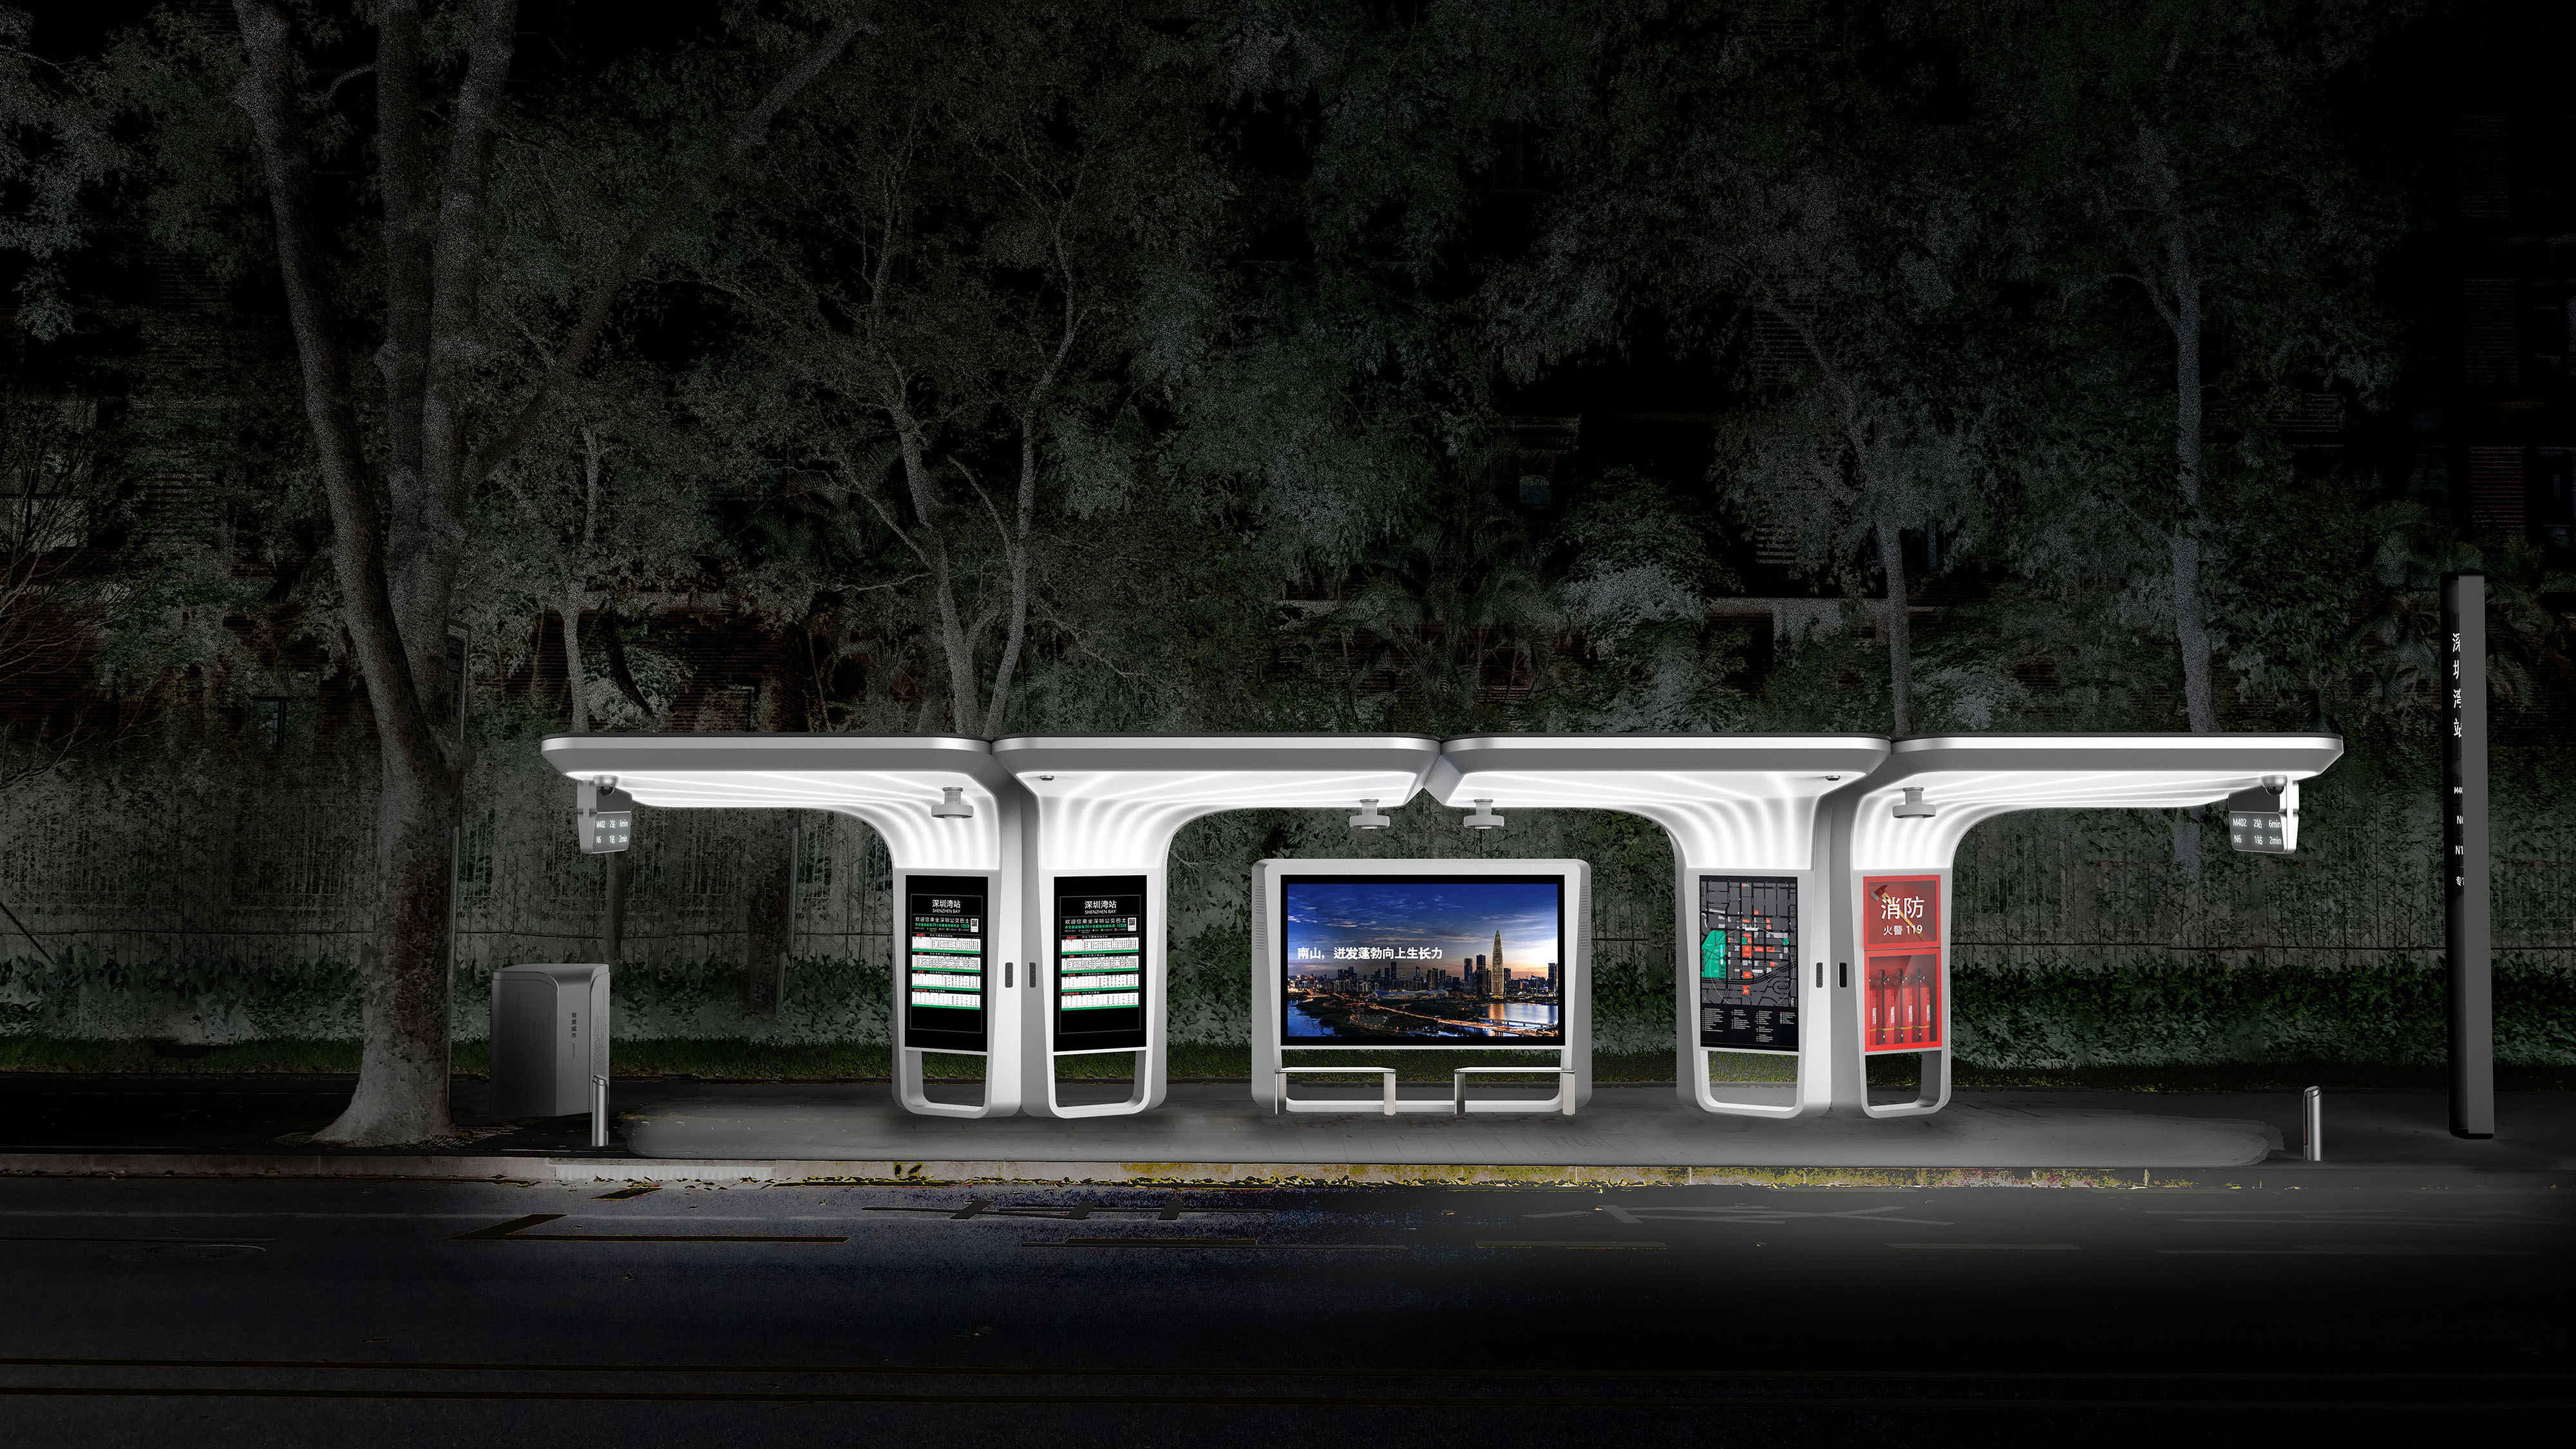 Sustainable urban solar bus station